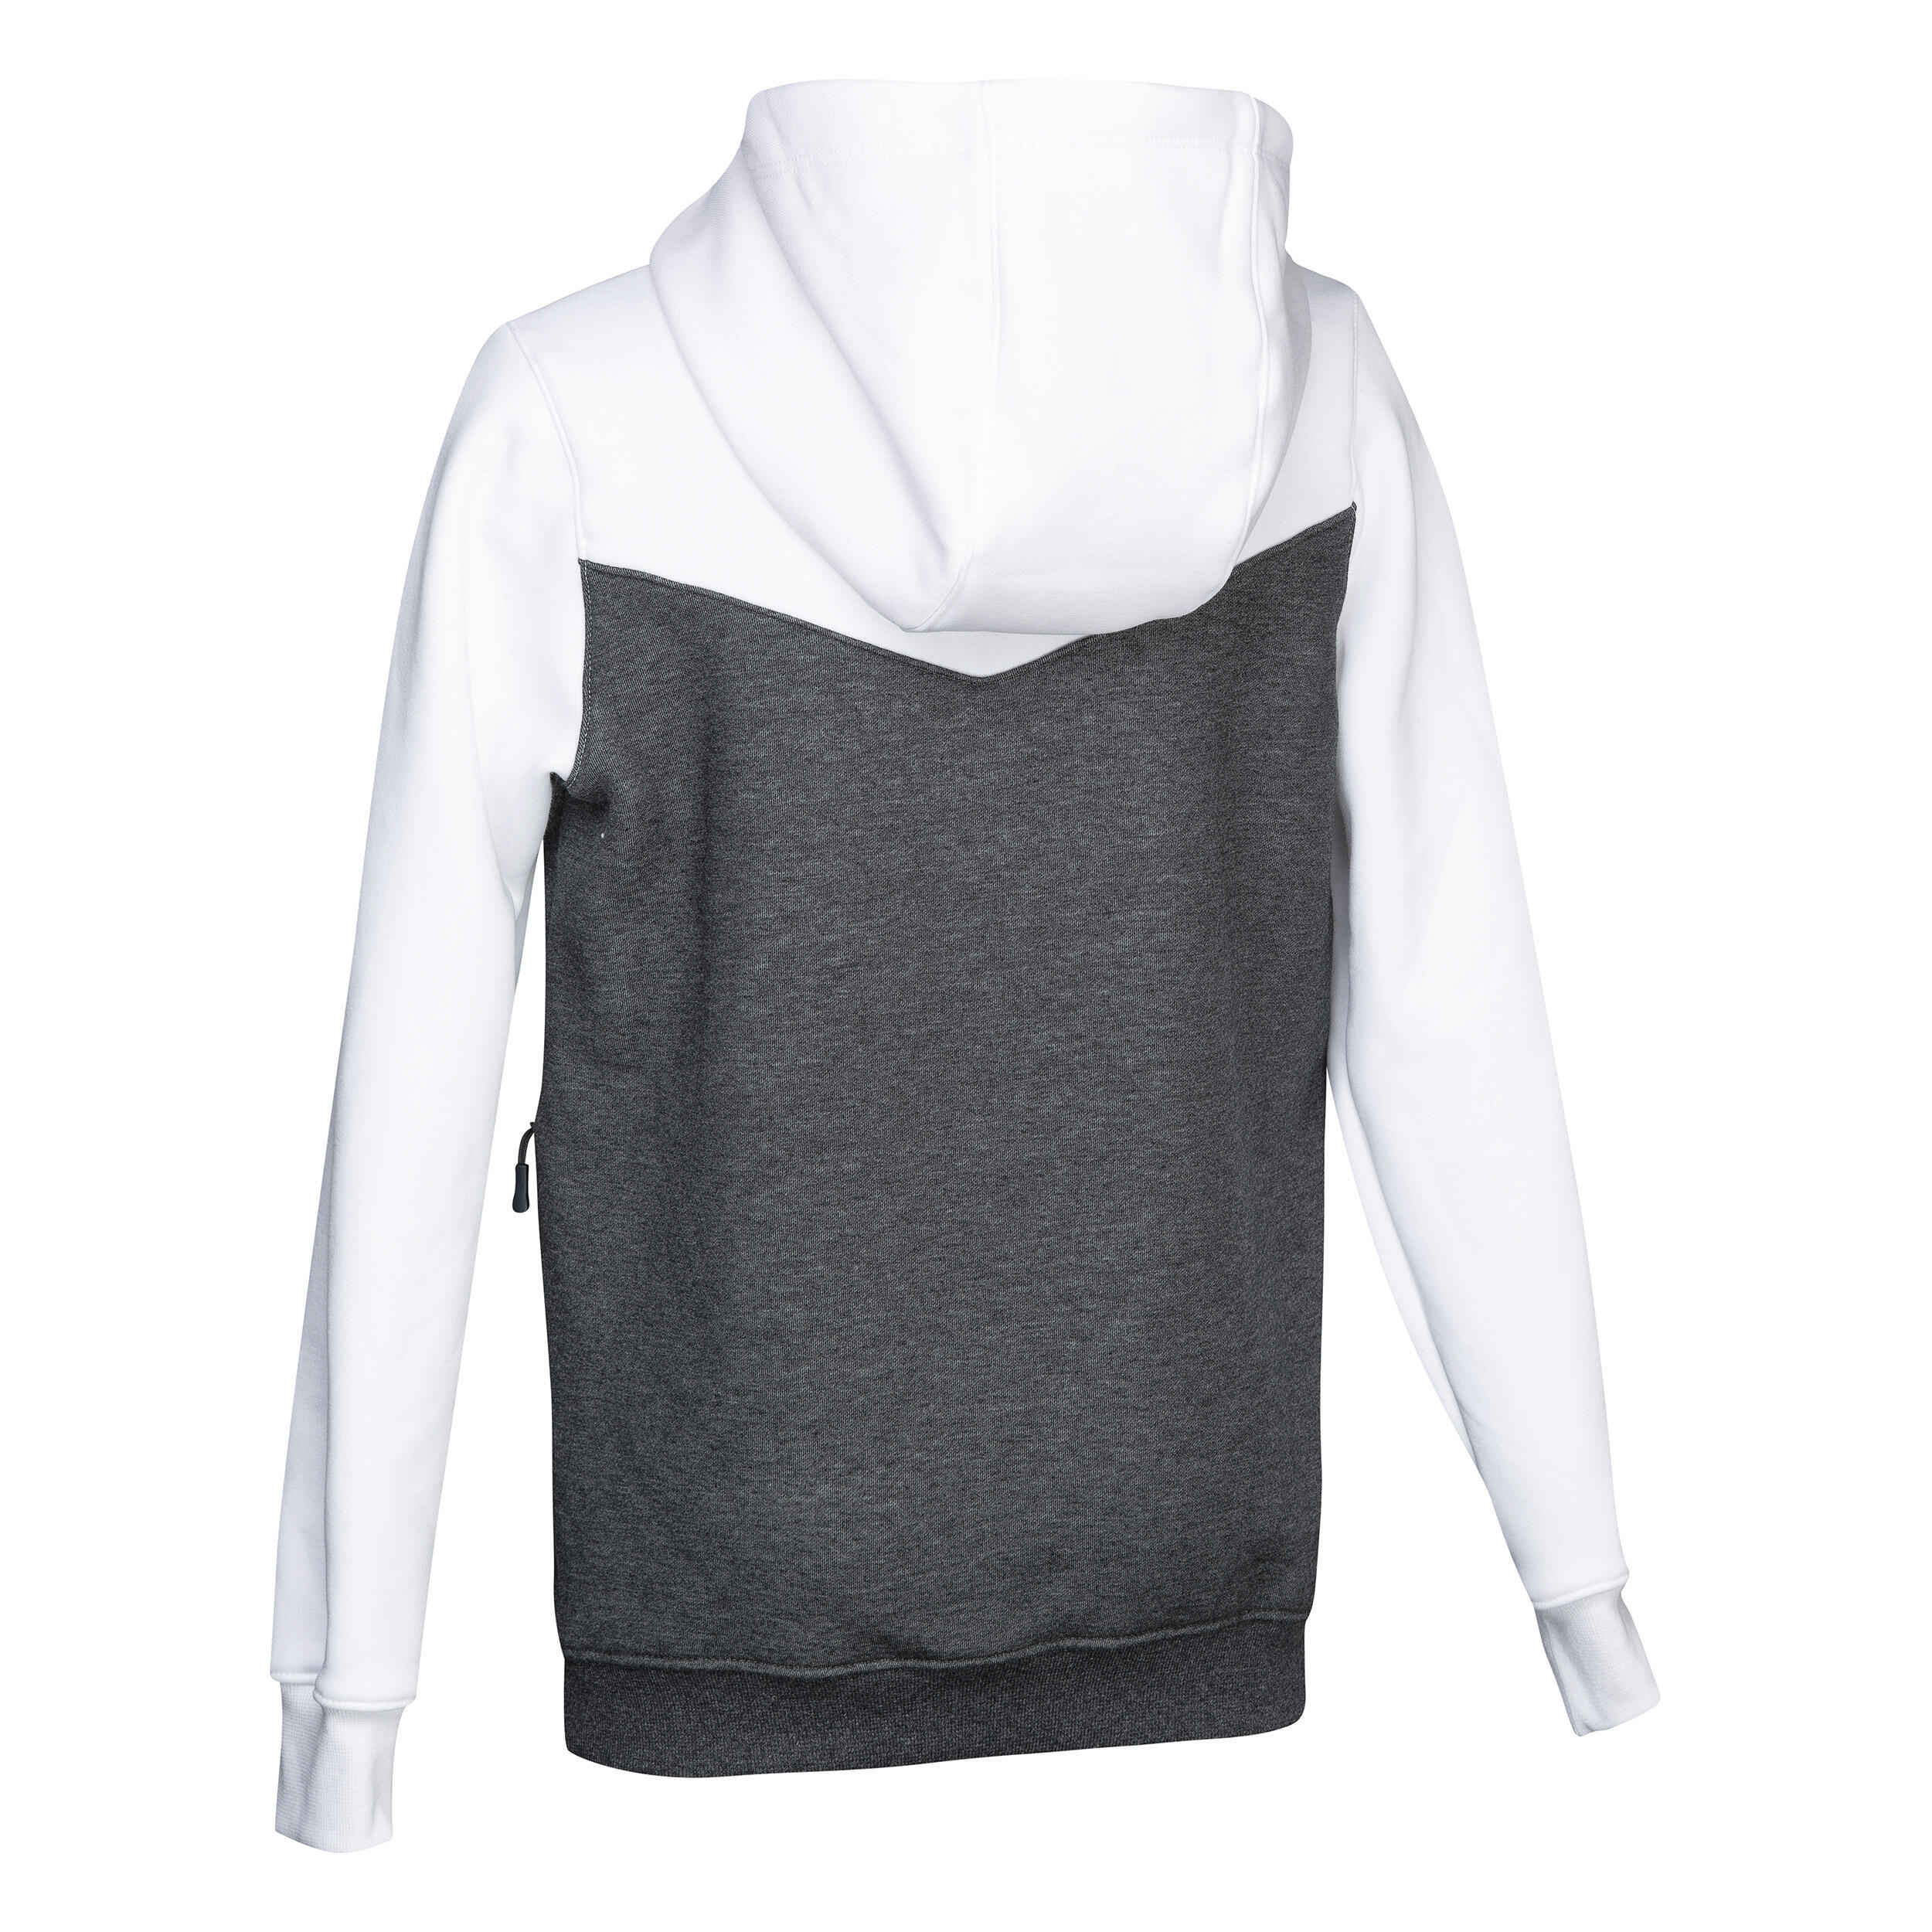 Girls' Field Hockey Sweatshirt FH500 - White/Grey/Pink 2/3